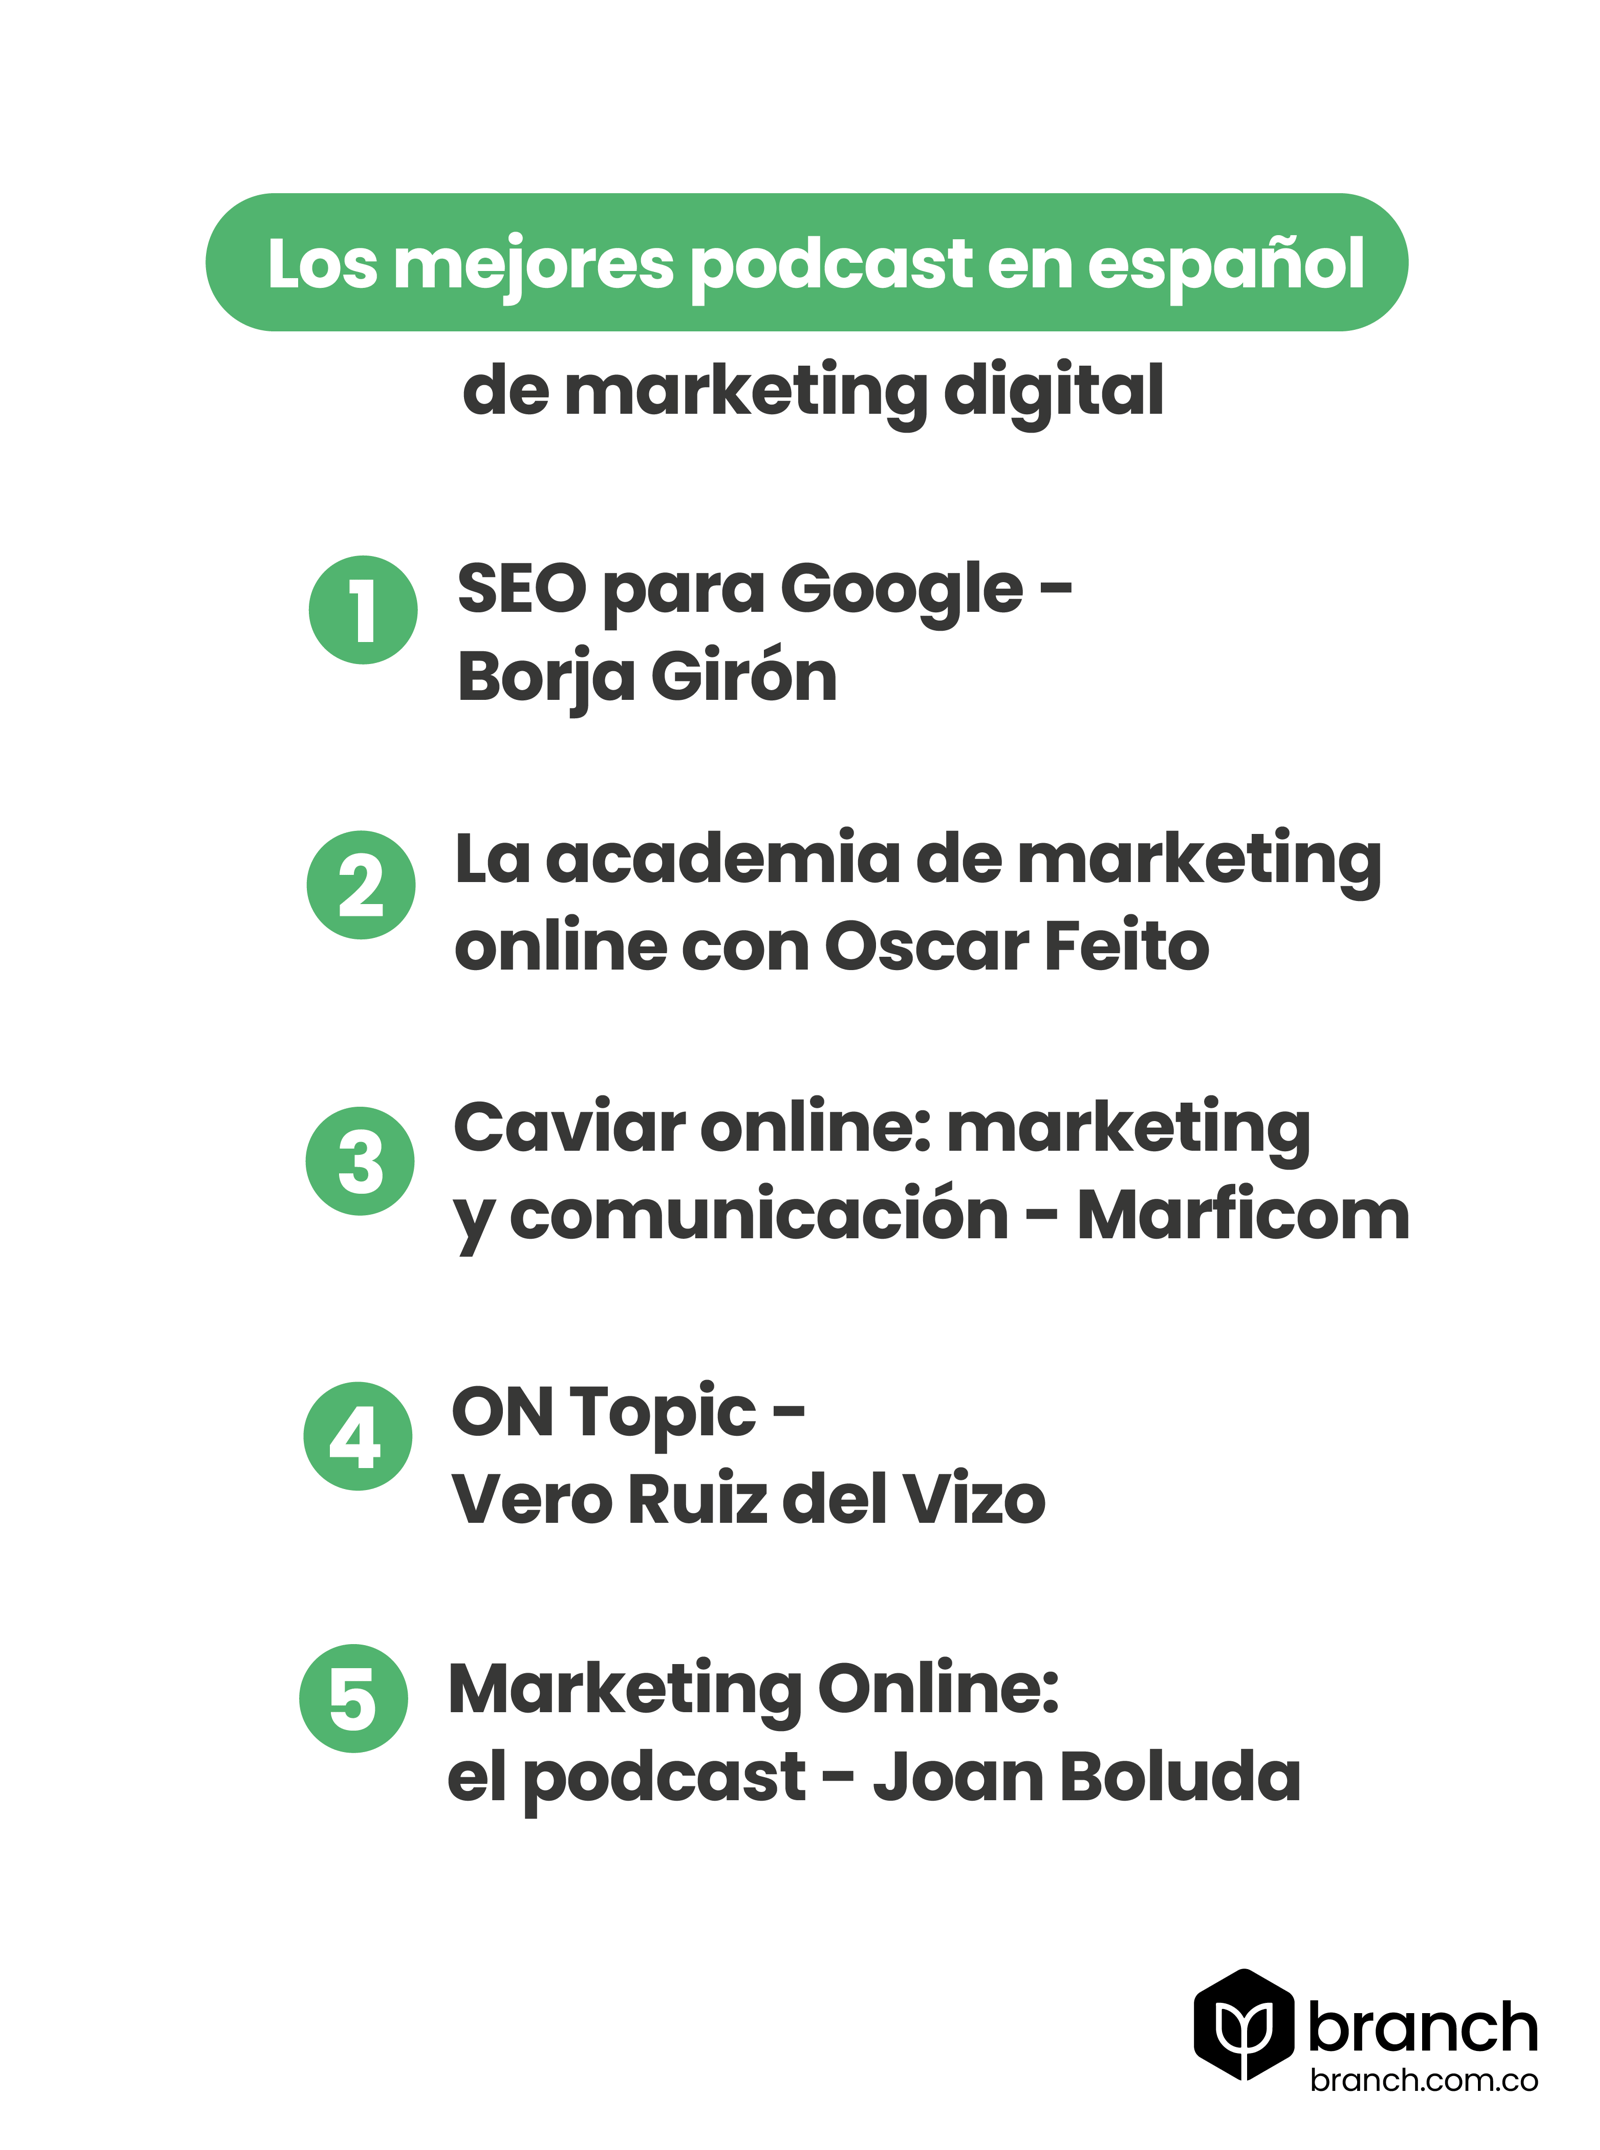 infografia-los-mejores-podcast-en-español-de-marketing-digital-2021